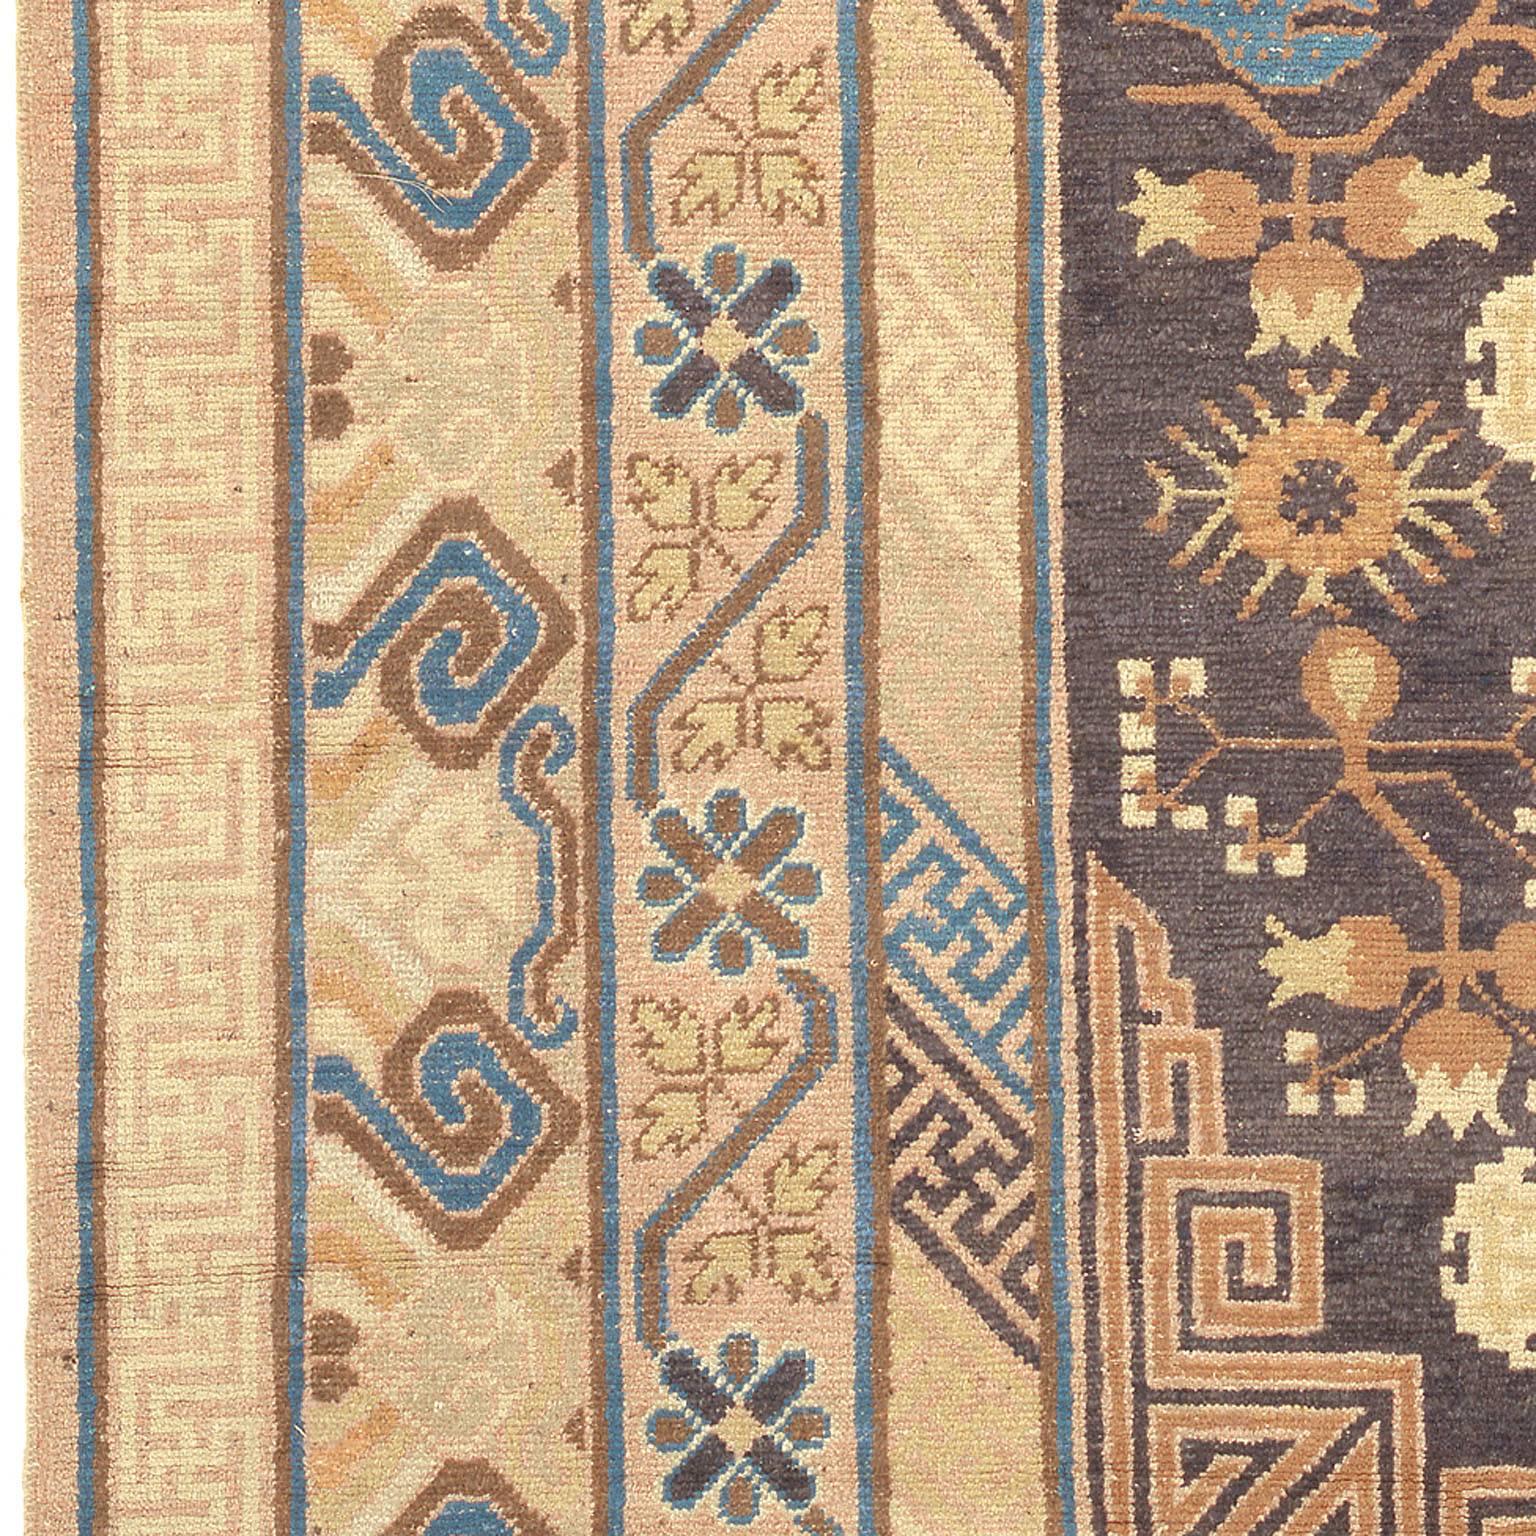 Early 20th Century Khotan Carpet For Sale 1